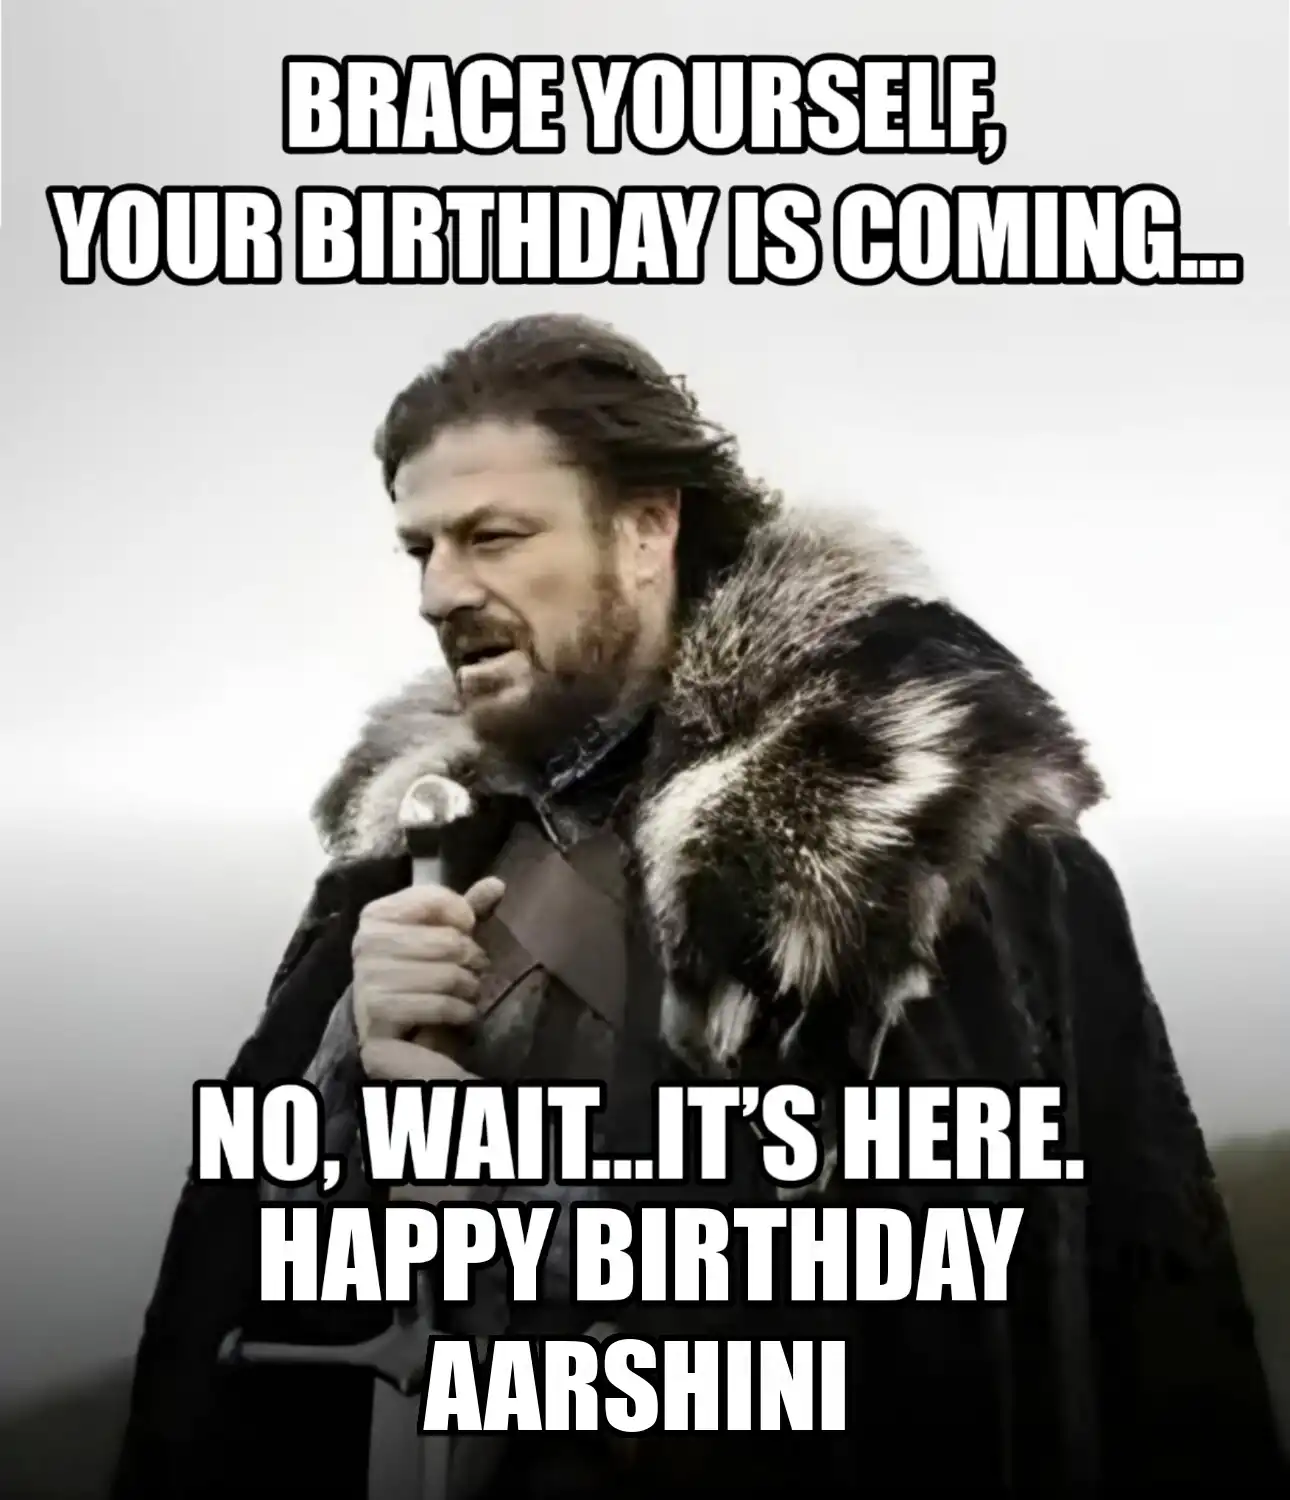 Happy Birthday Aarshini Brace Yourself Your Birthday Is Coming Meme